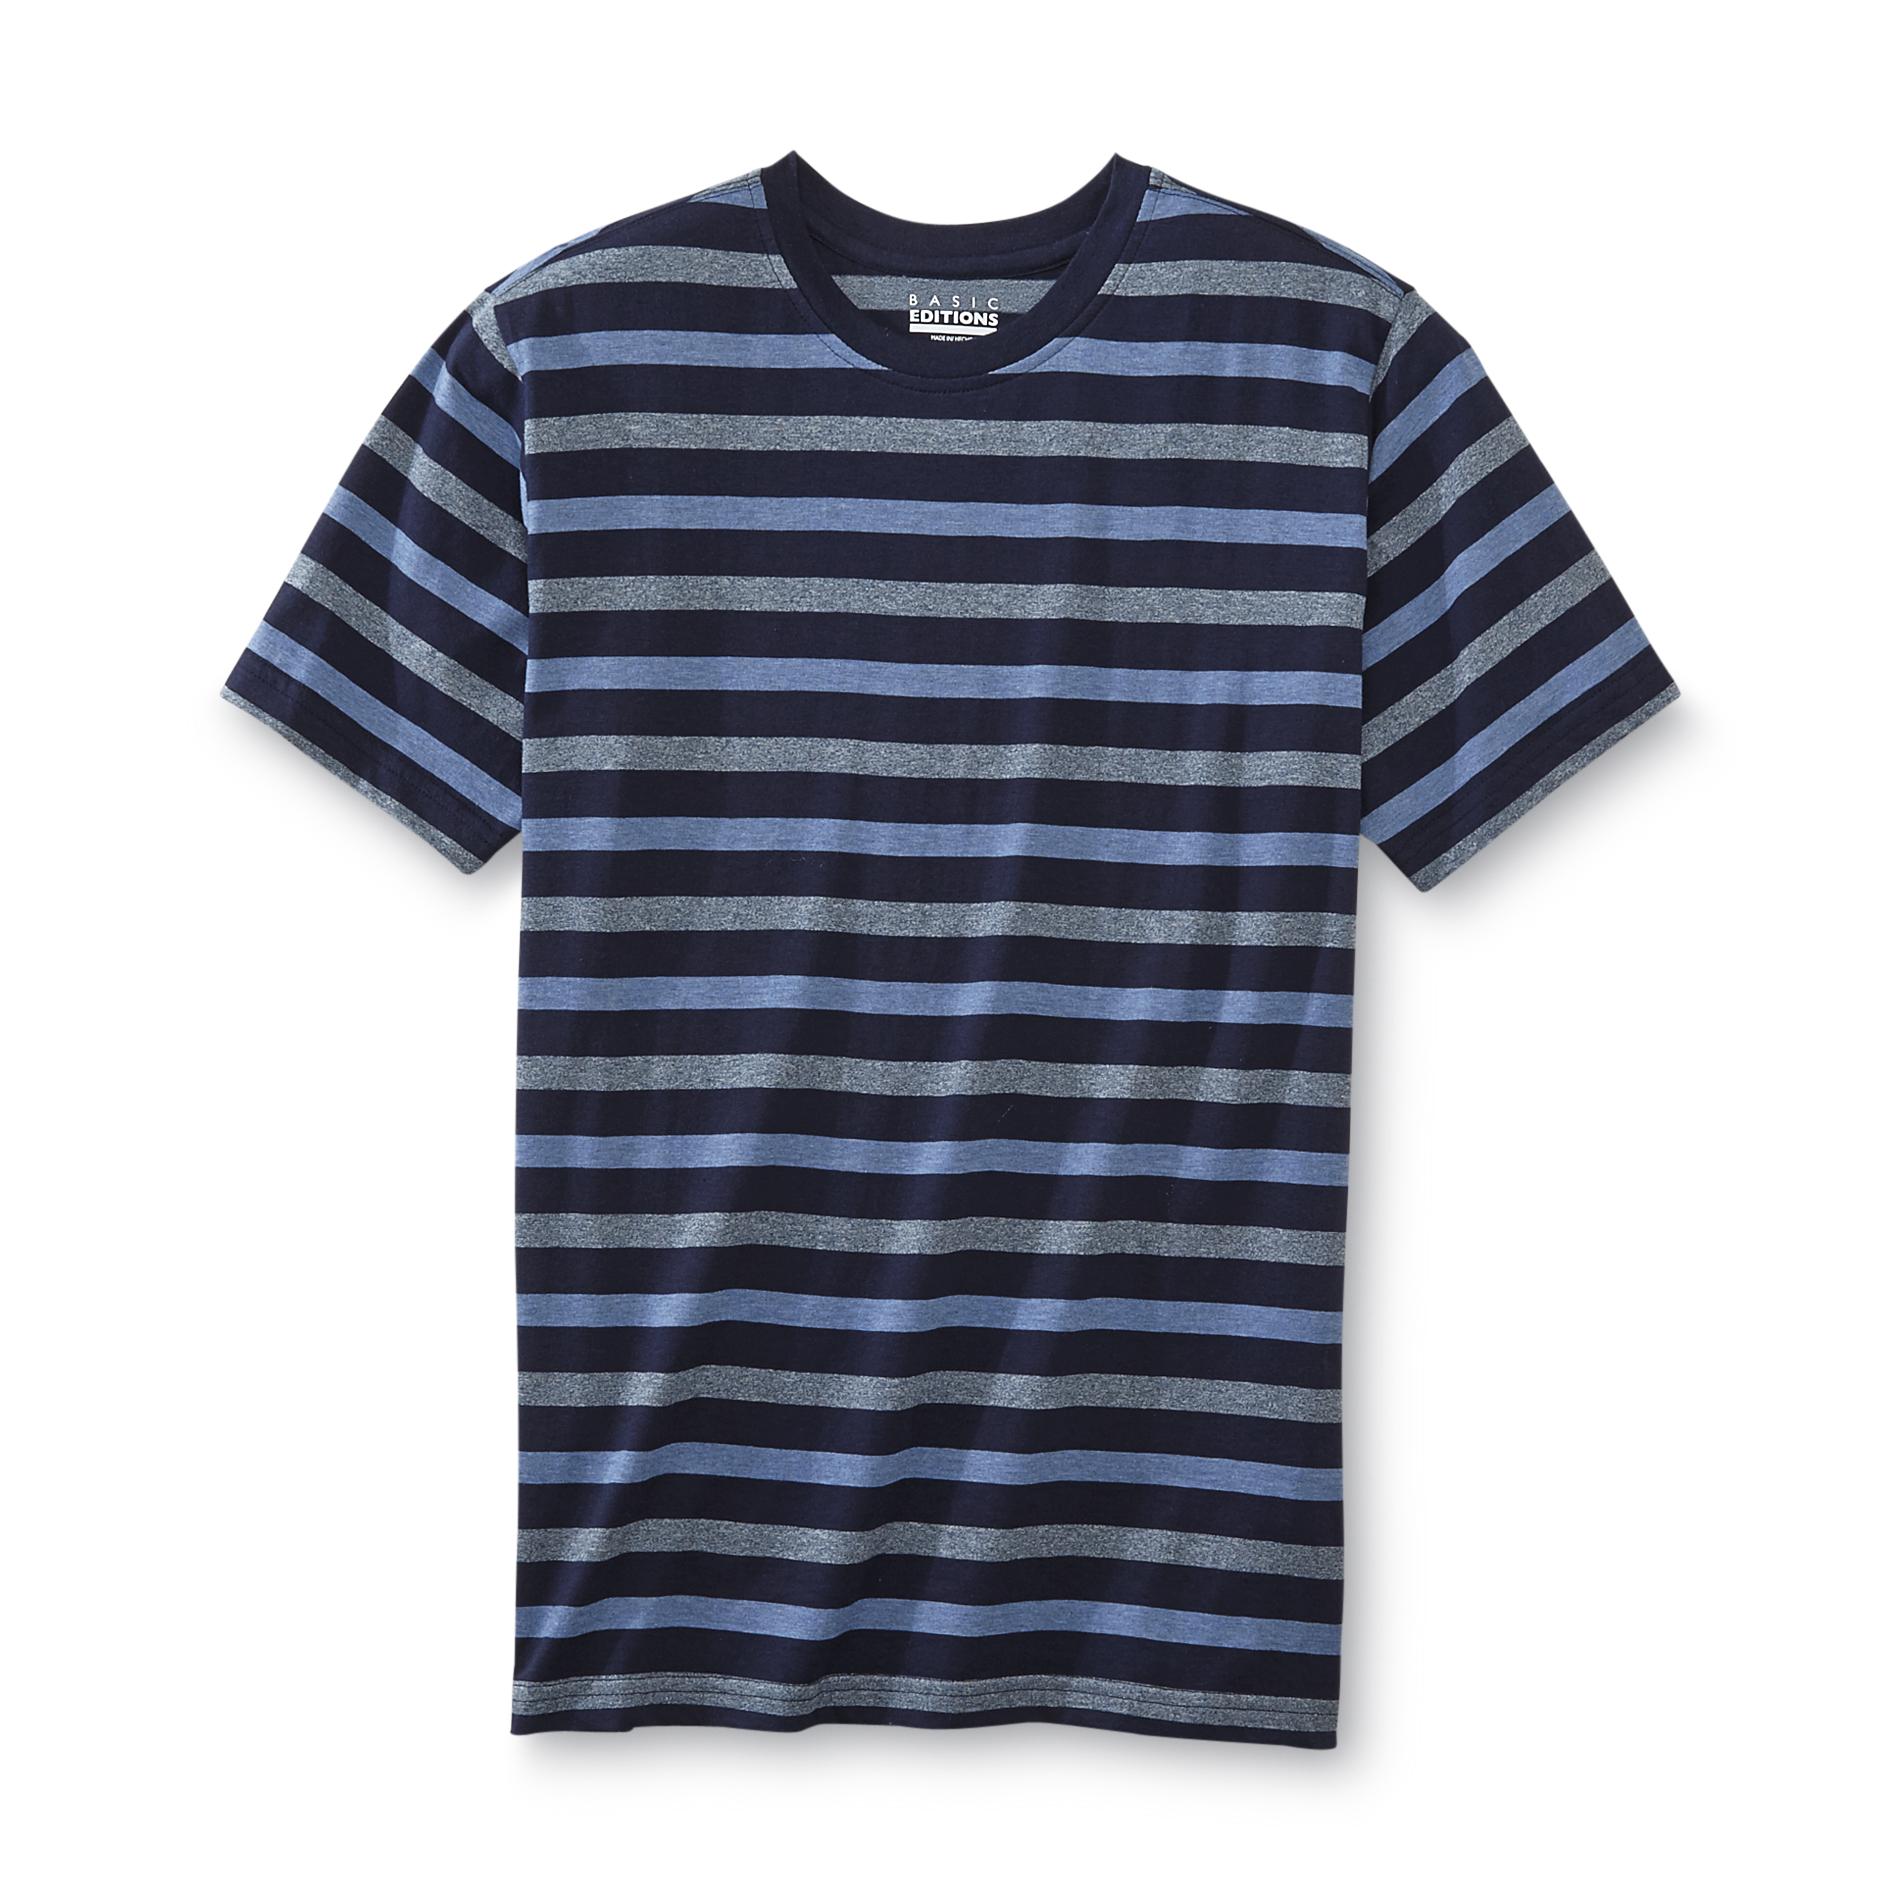 Basic Editions Men's Big & Tall T-Shirt - Heathered Stripe